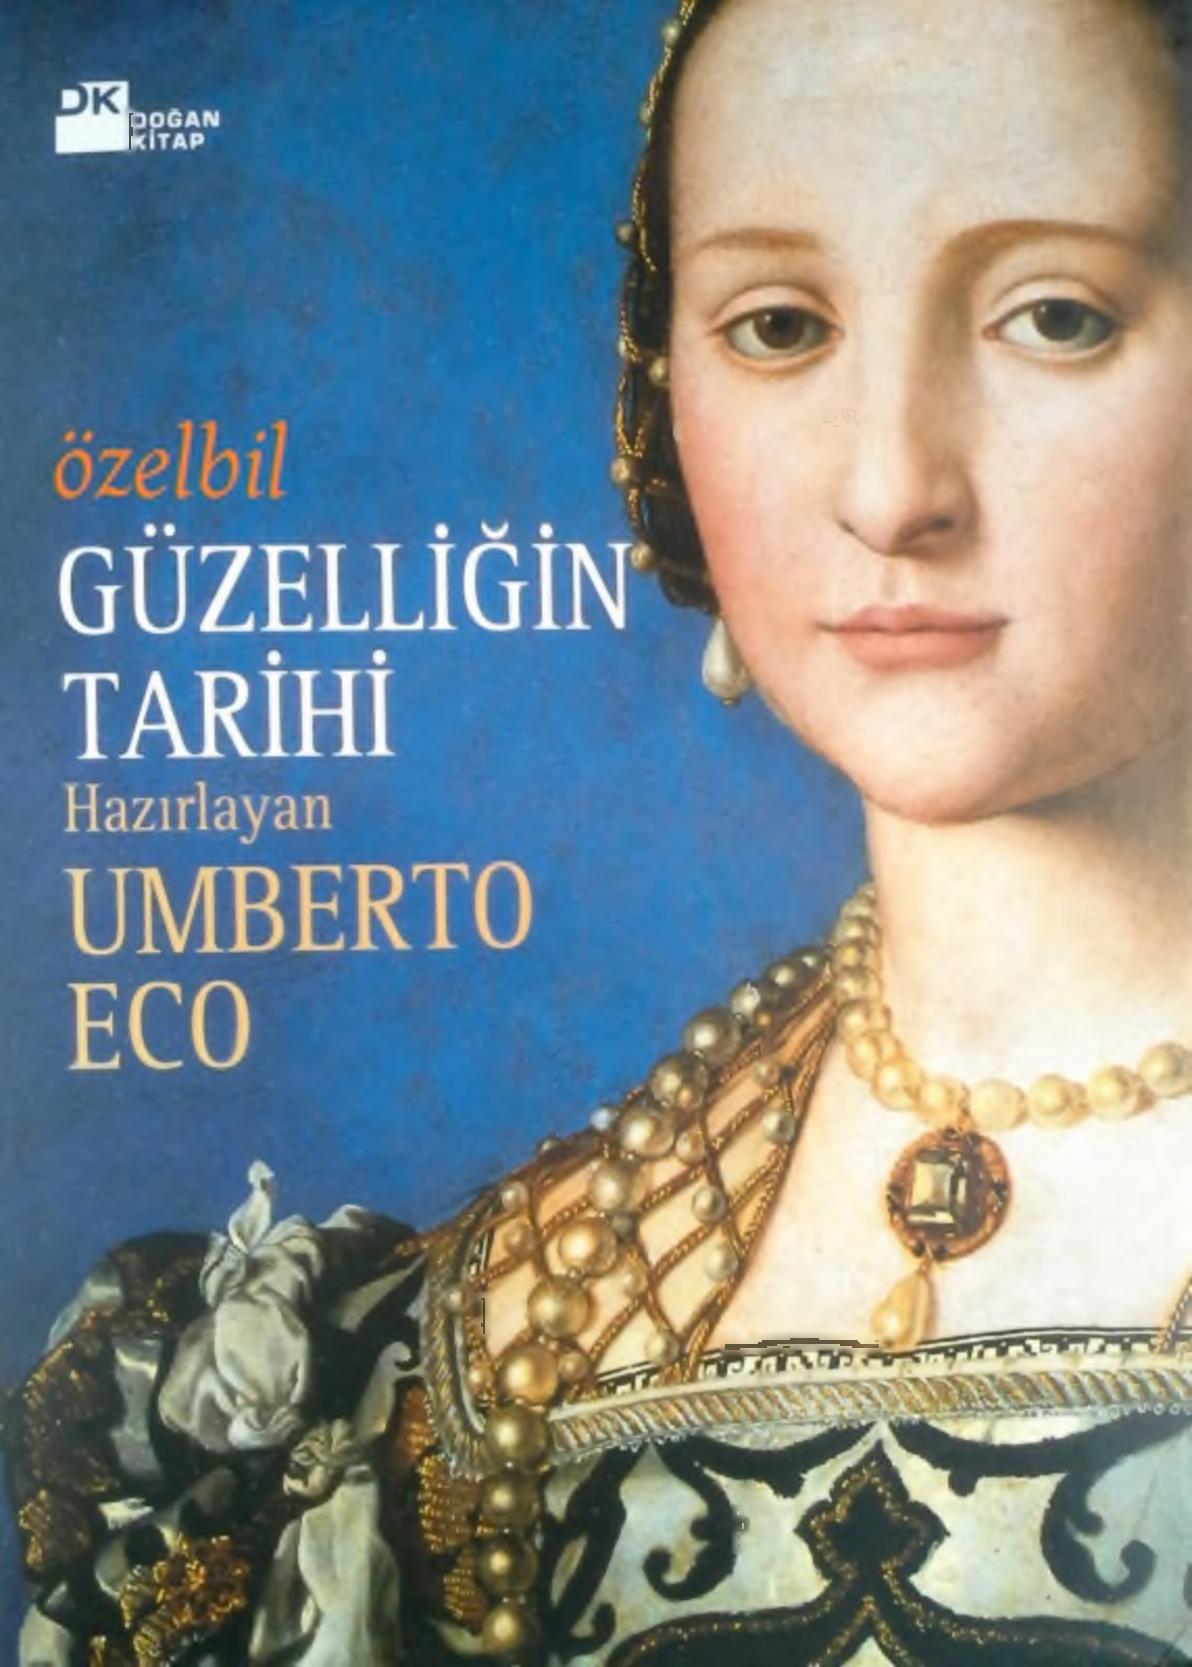 Güzelliğin Tarihi - Umberto Eco